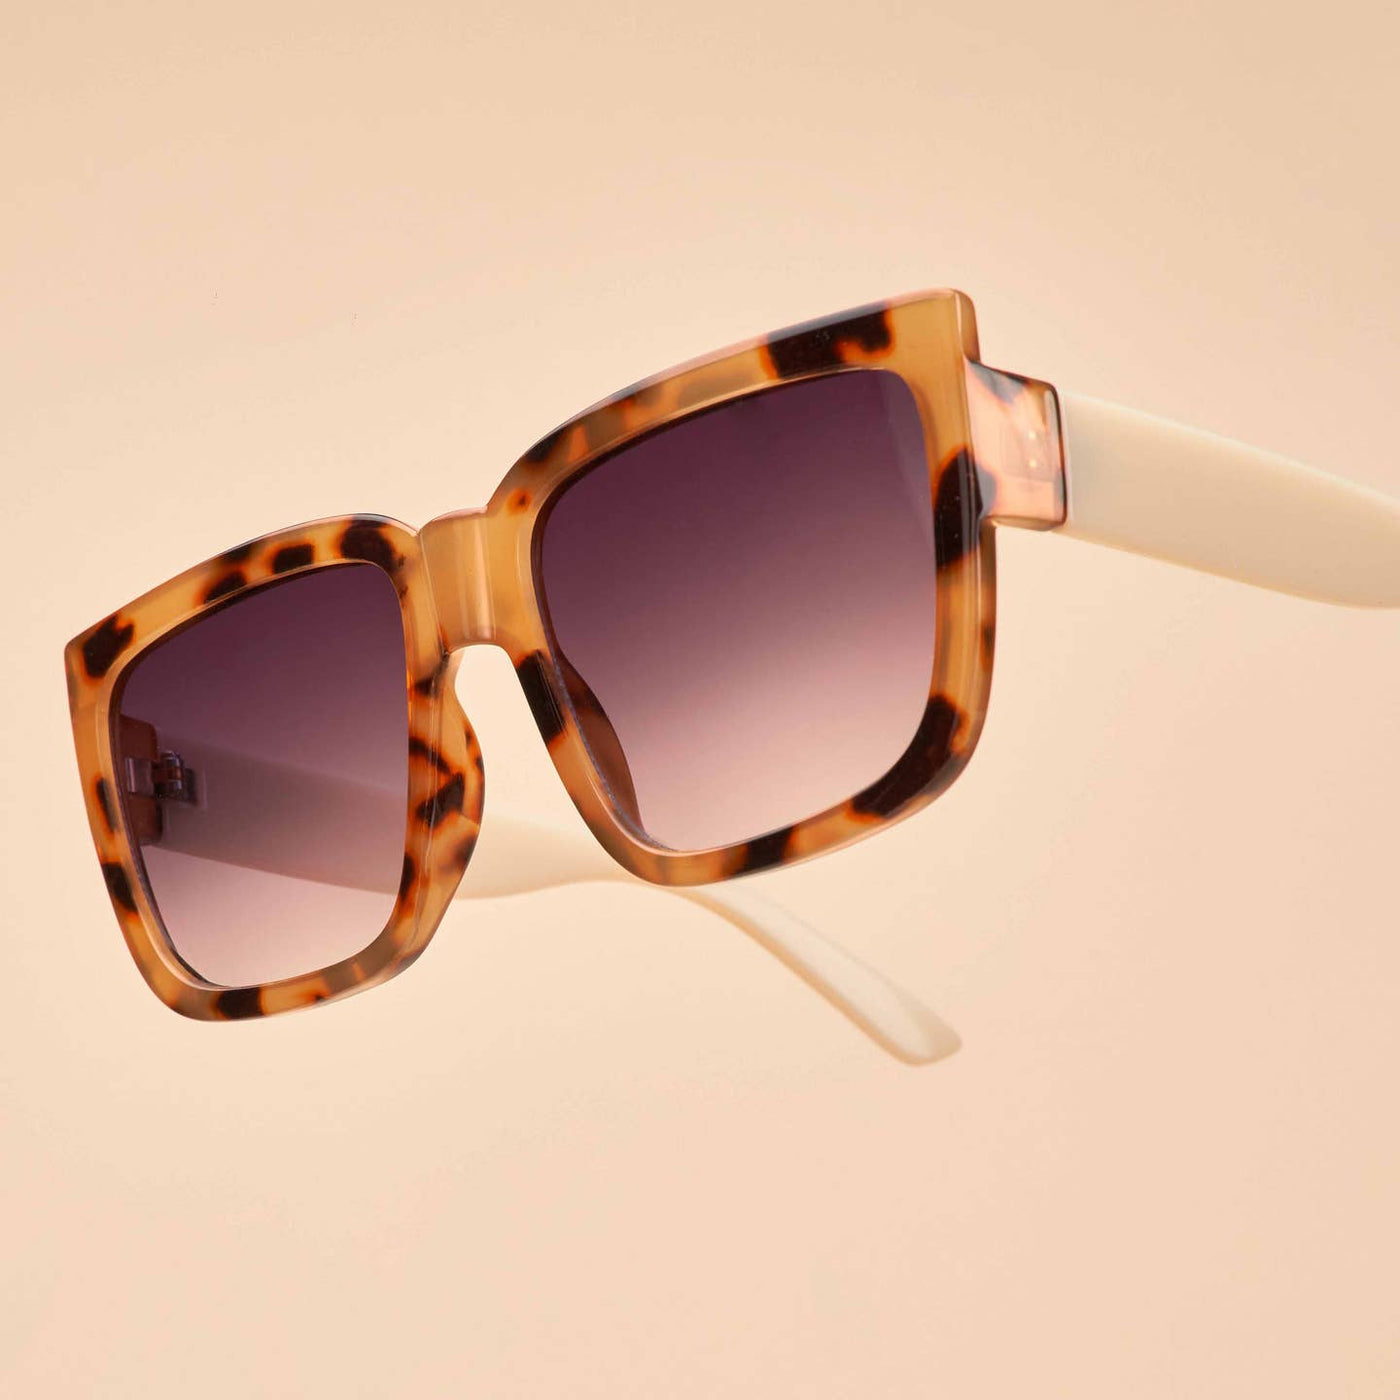 Ellery Luxe Sunglasses - Tortoiseshell/Coconut